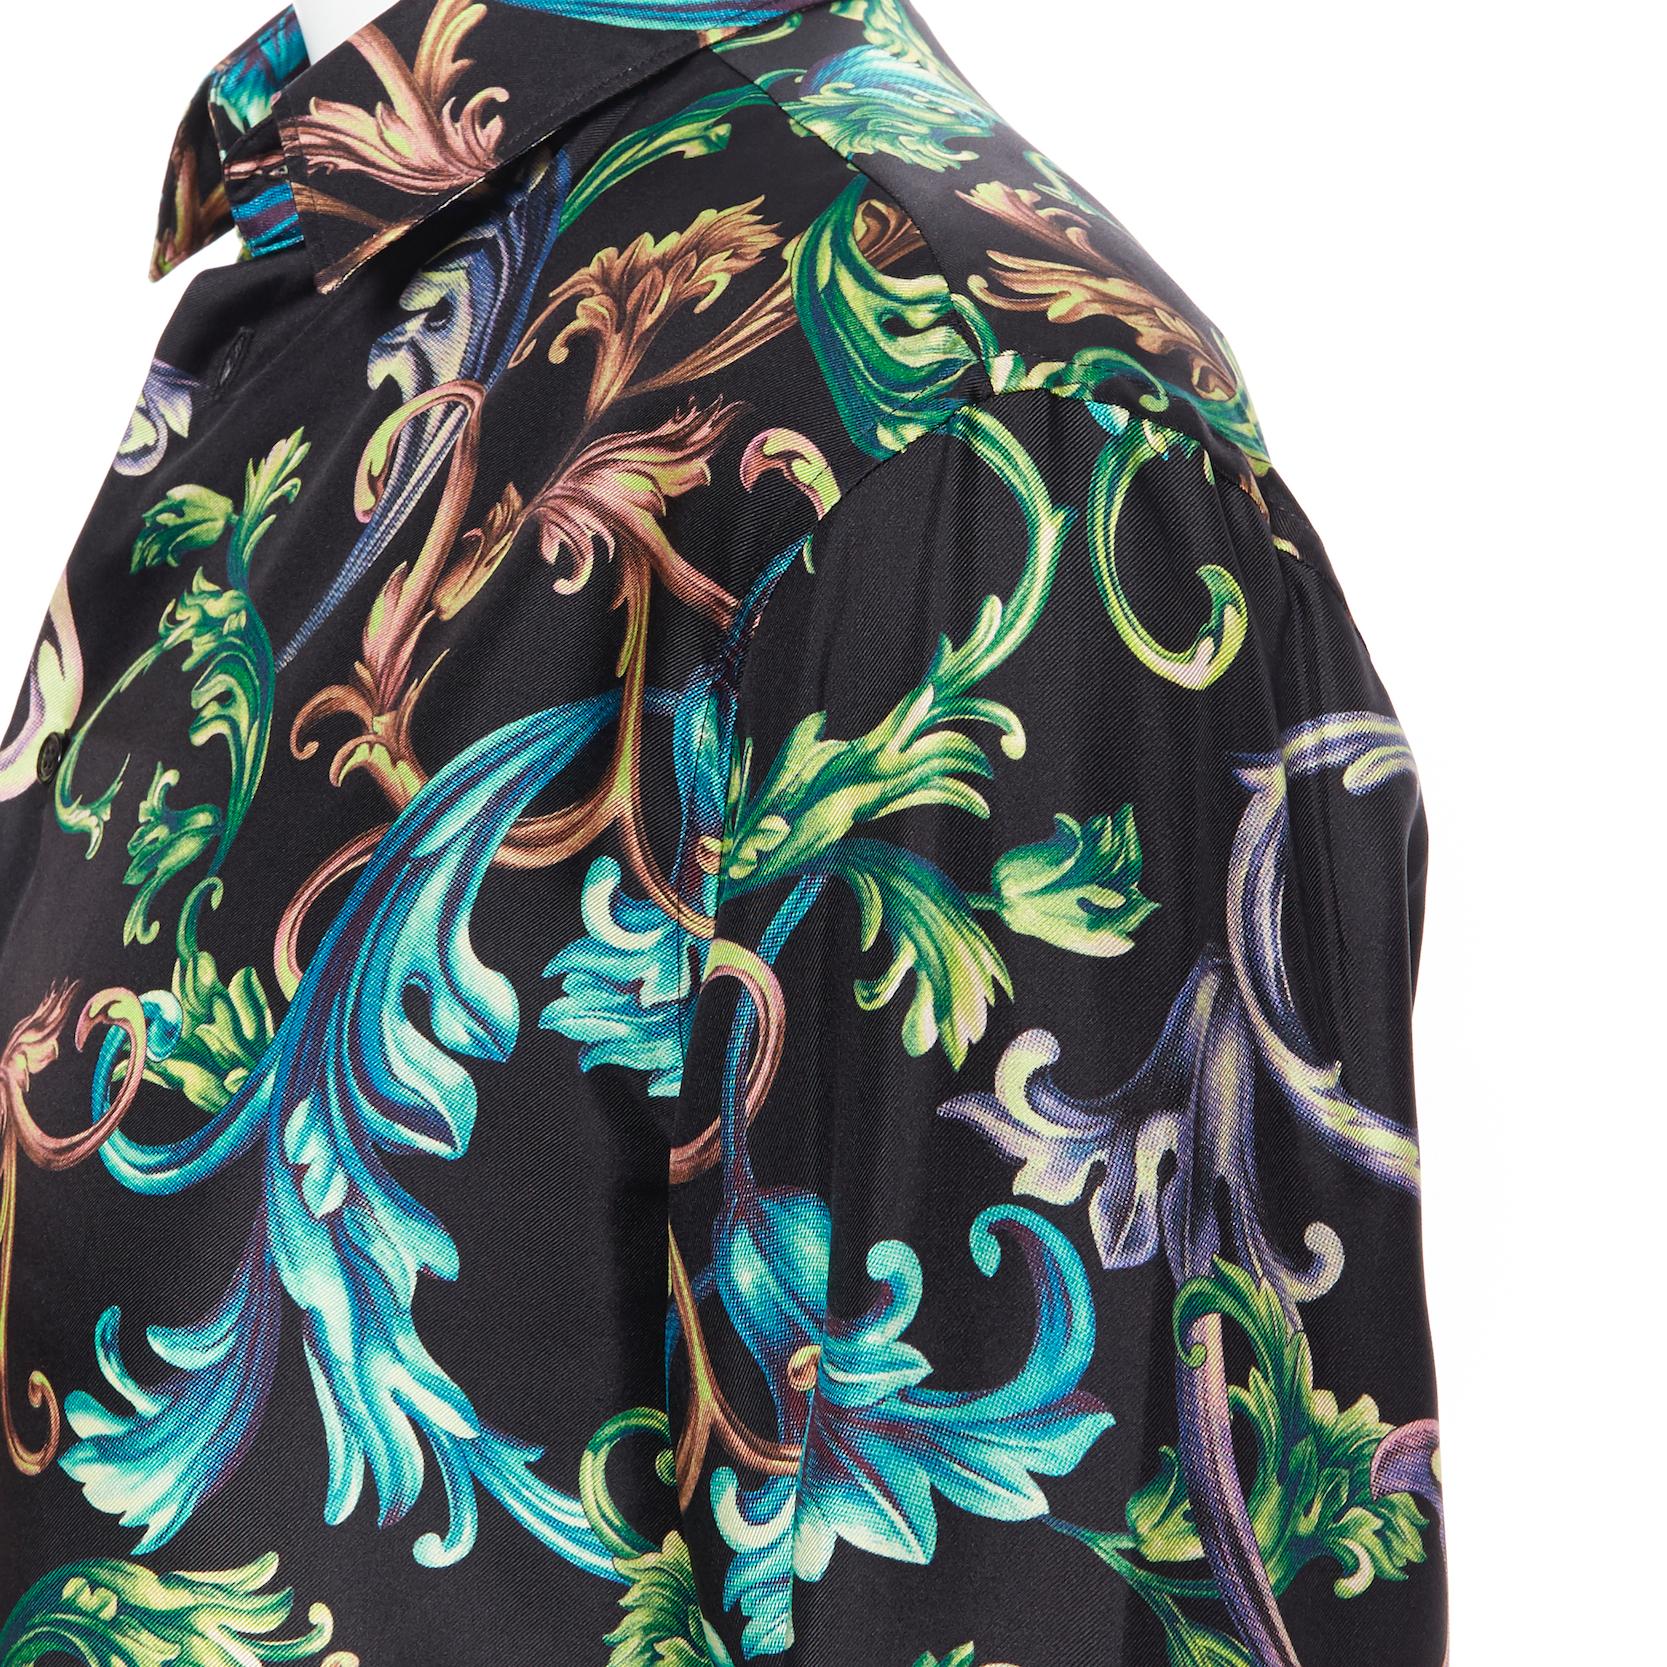 new VERSACE 2018 Runway Acid Baroque black green floral 100% silk shirt EU43 XXL
Brand: Versace
Designer: Donatella Versace
Collection: Pre-Fall 2018
As seen on: Korean pop group Monsta X
Model Name / Style: Silk shirt
Material: Silk
Color: